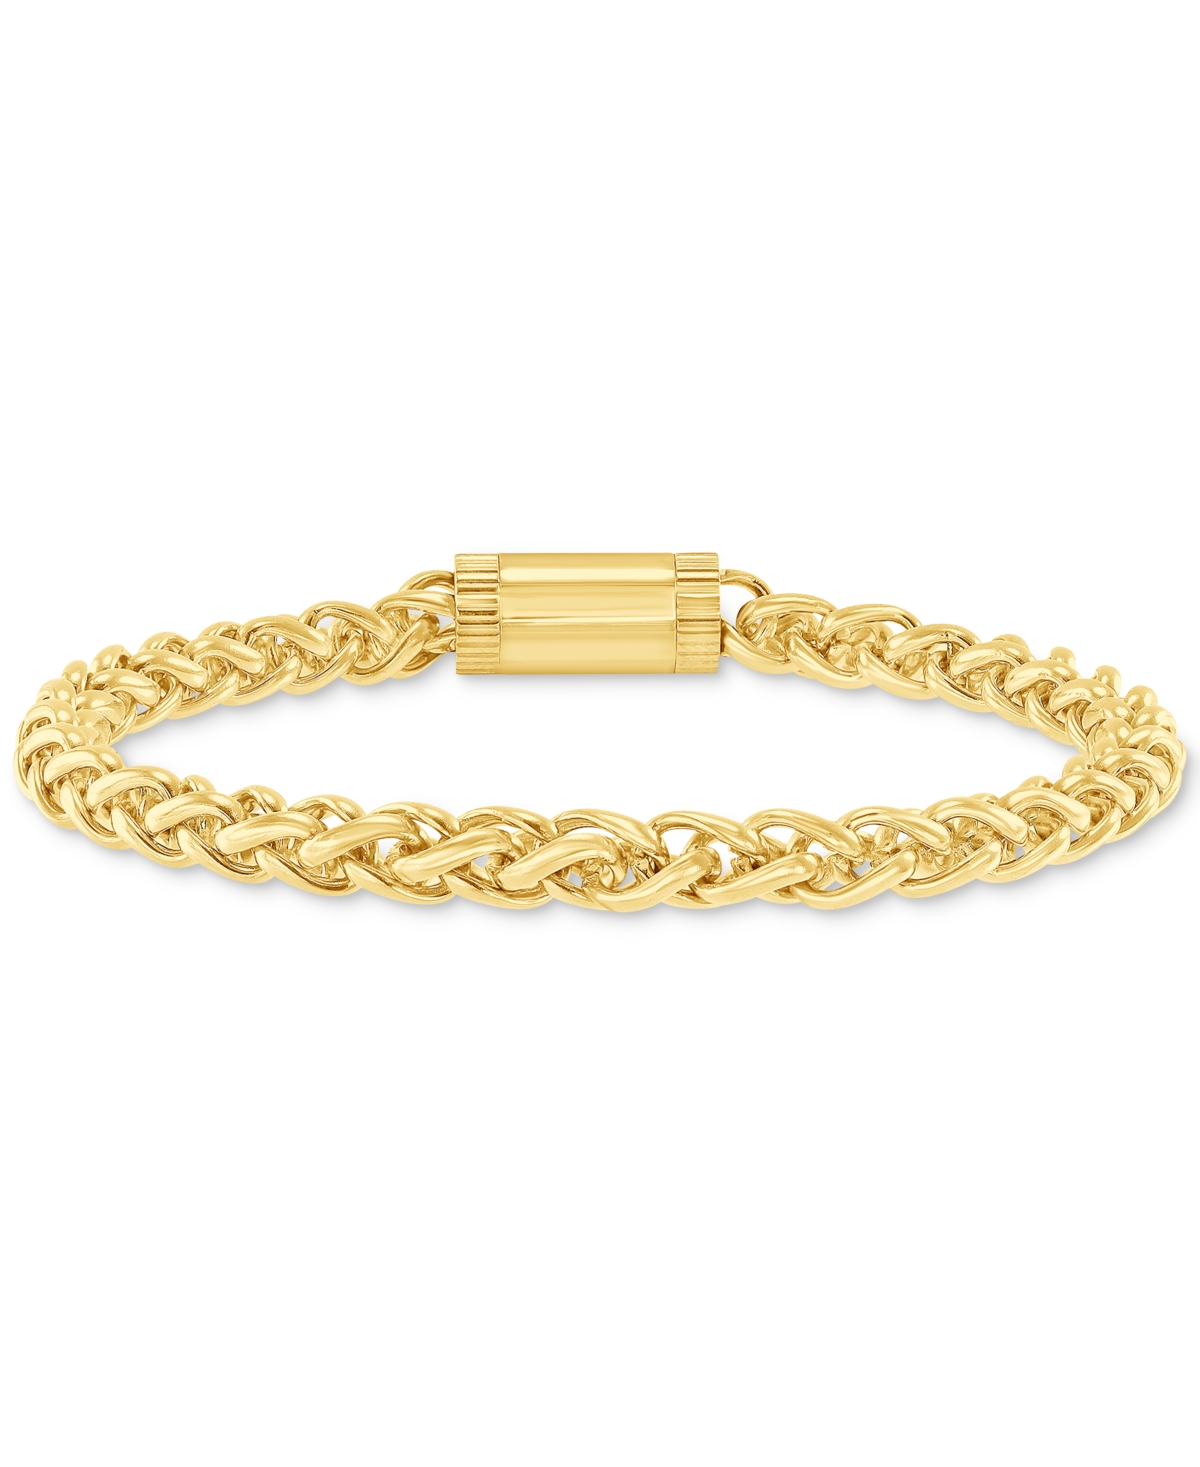 Men's Wheat Link Chain Bracelet in Stainless Steel - Gold-Tone